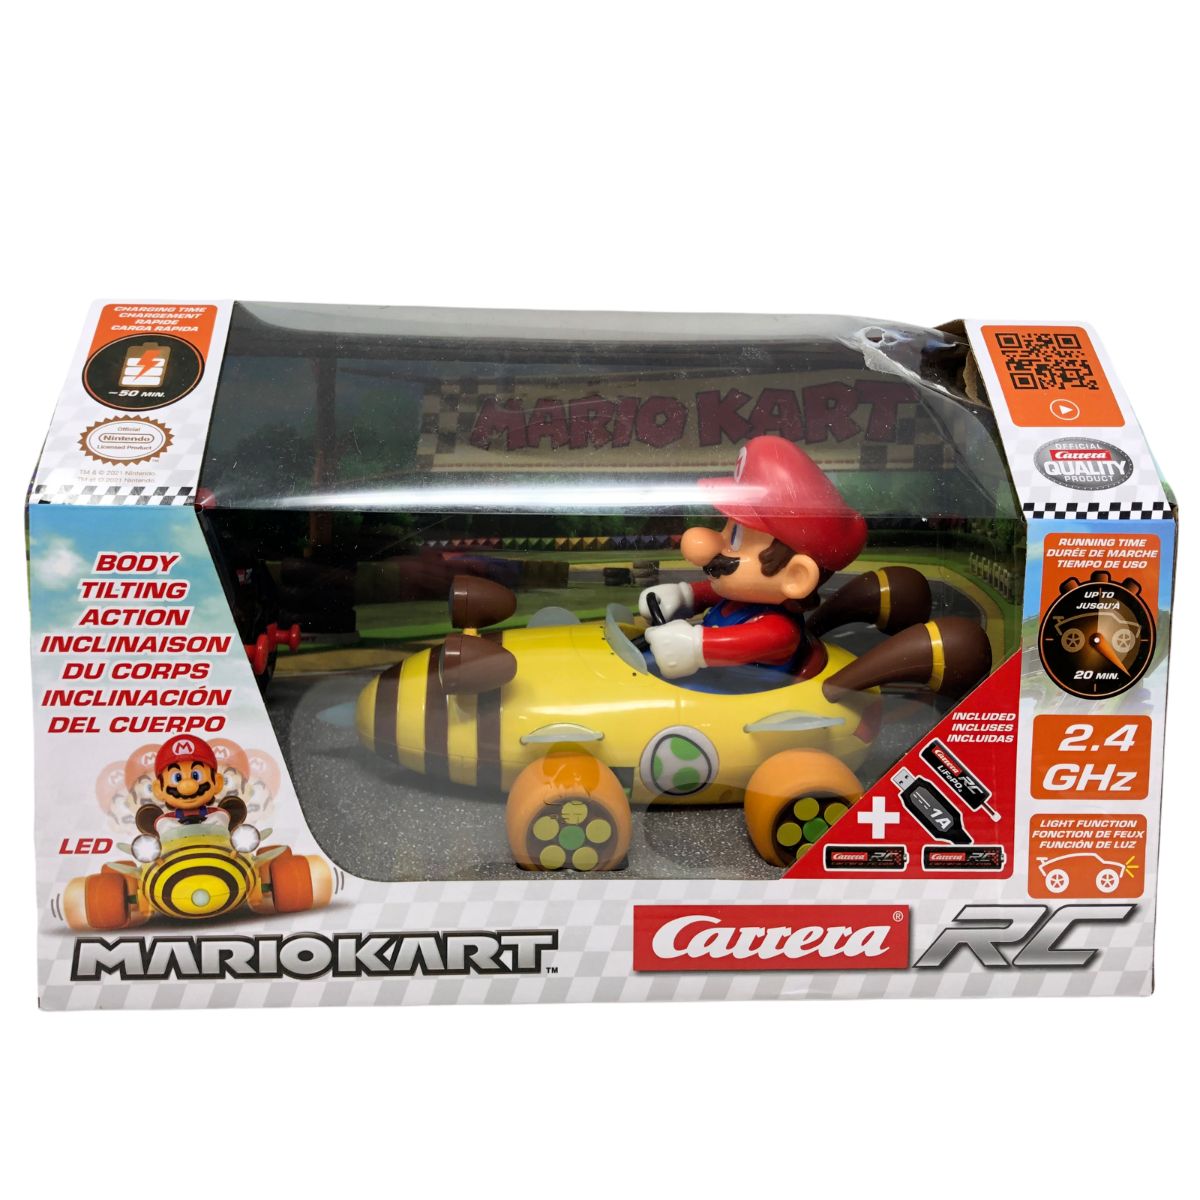 2.4Ghz Mario Kart Bumble V, M